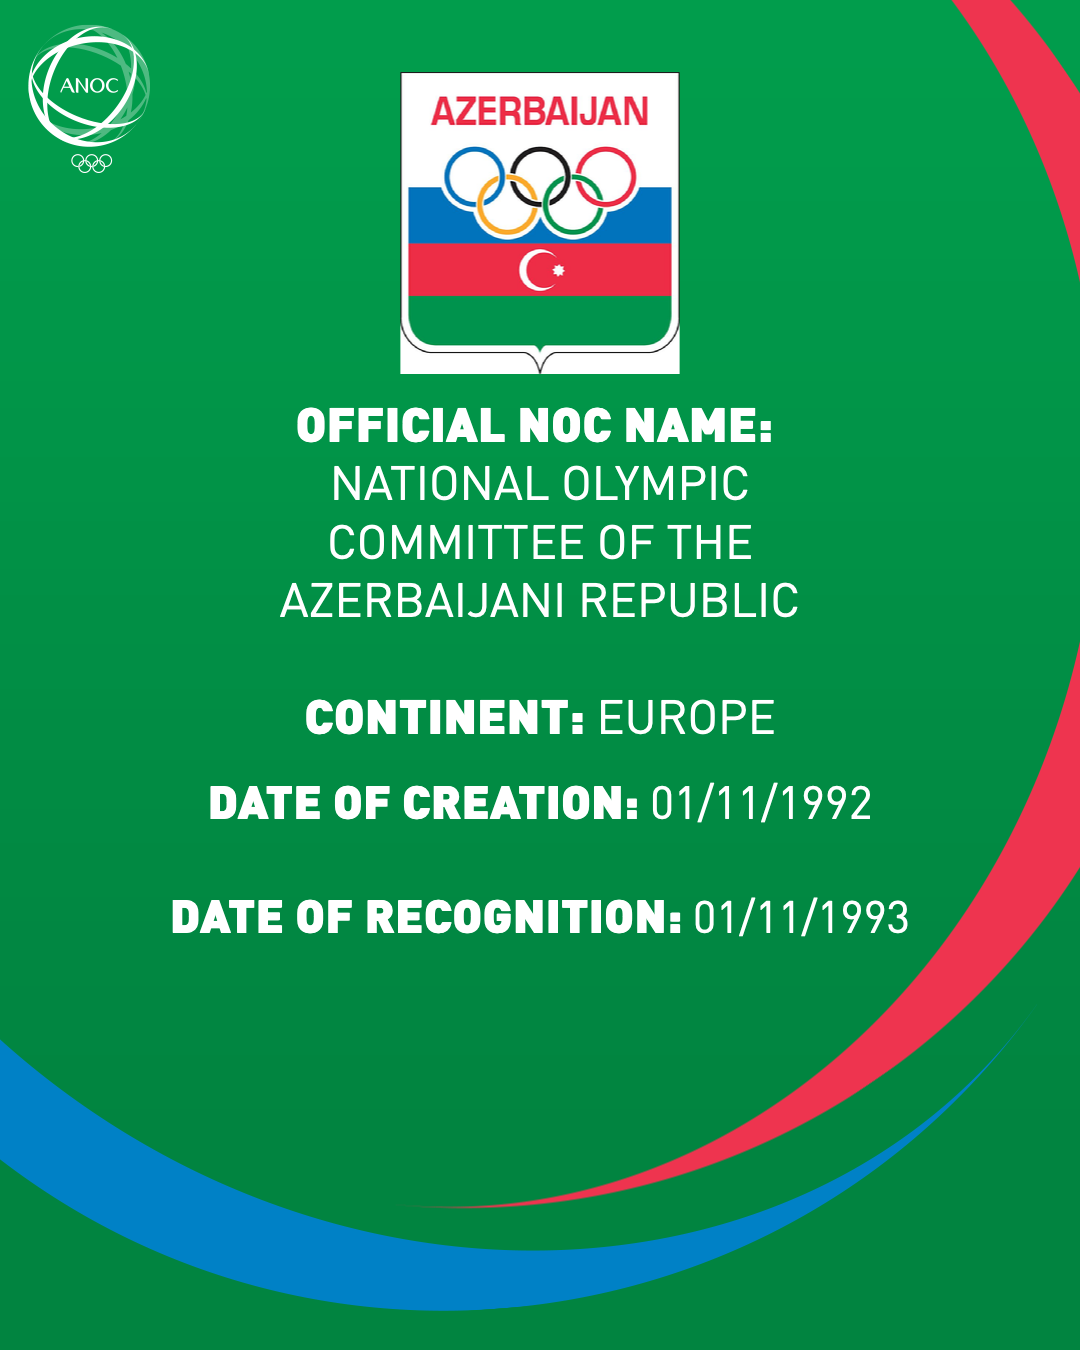 National Olympic Committee of the Azerbaijani Republic